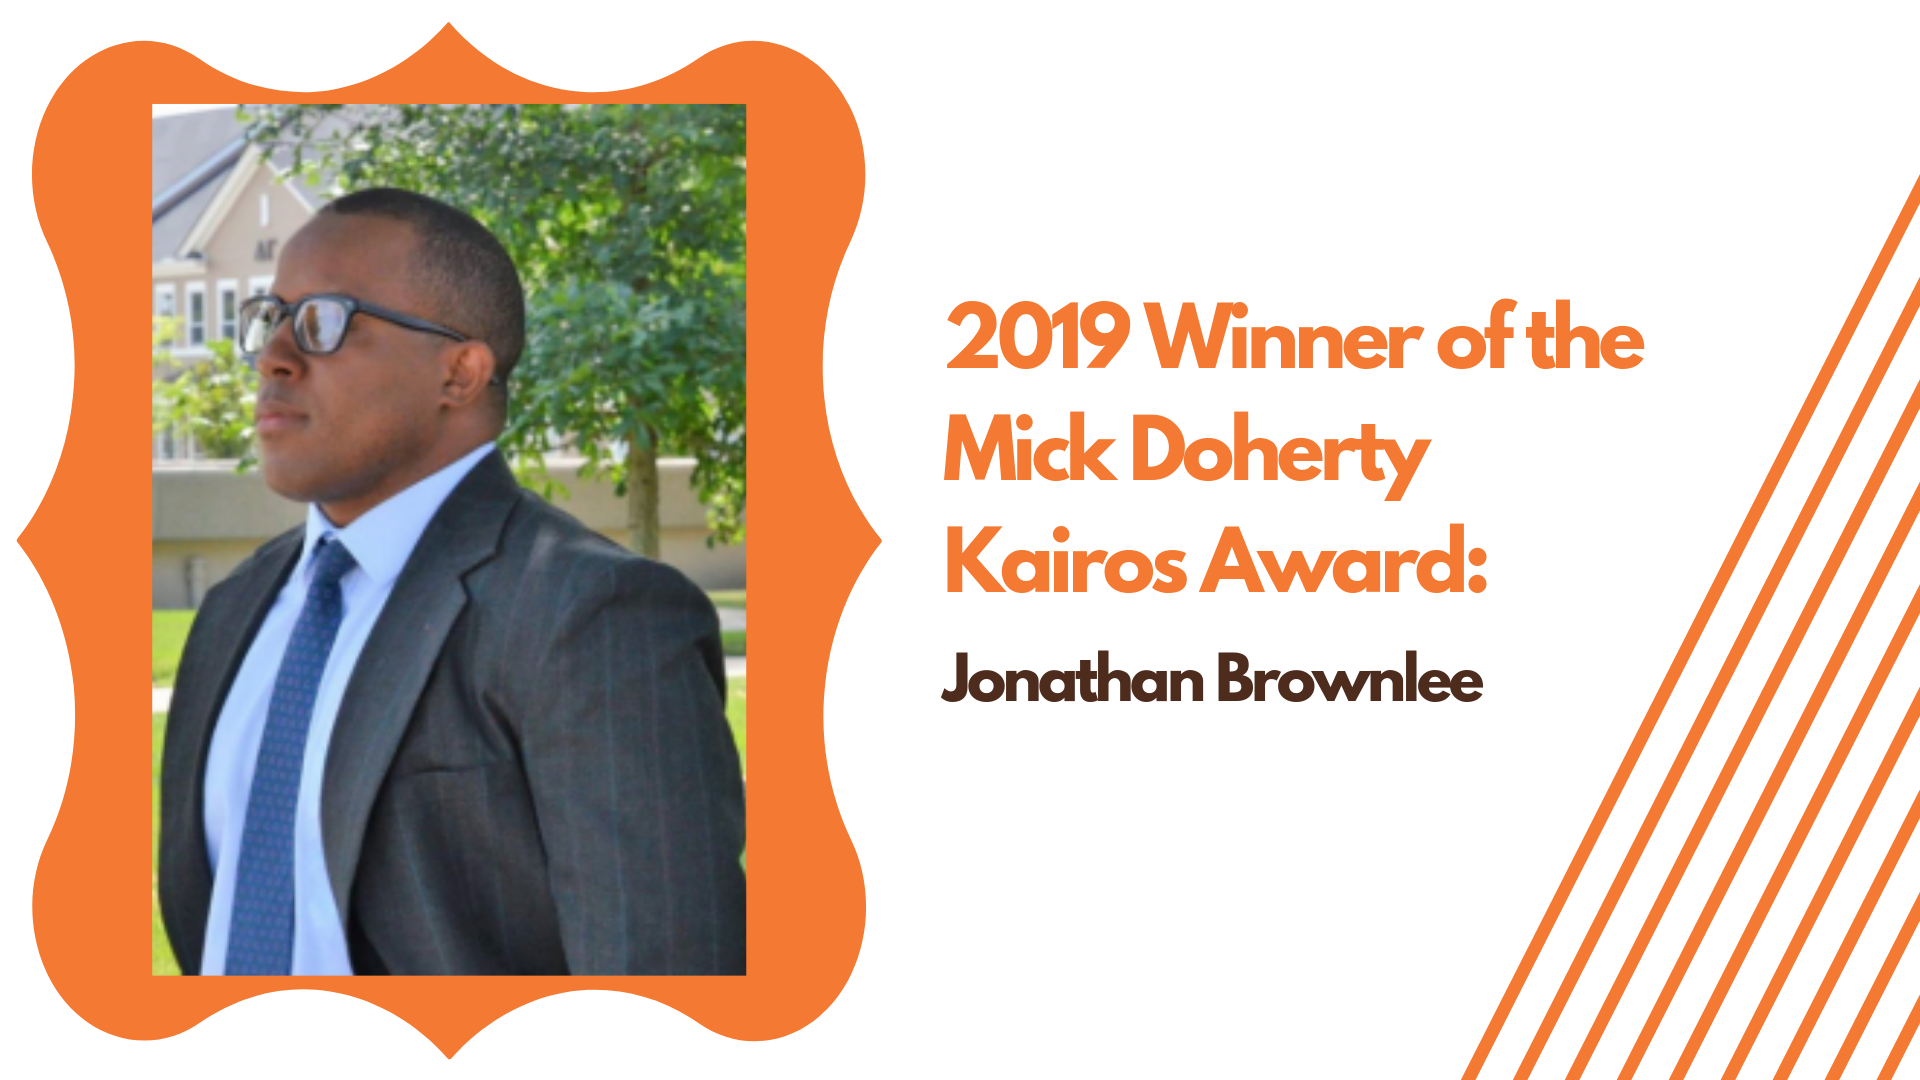 2019 Winner of the Mick Doherty Kairos Award: Jonathan Brownlee